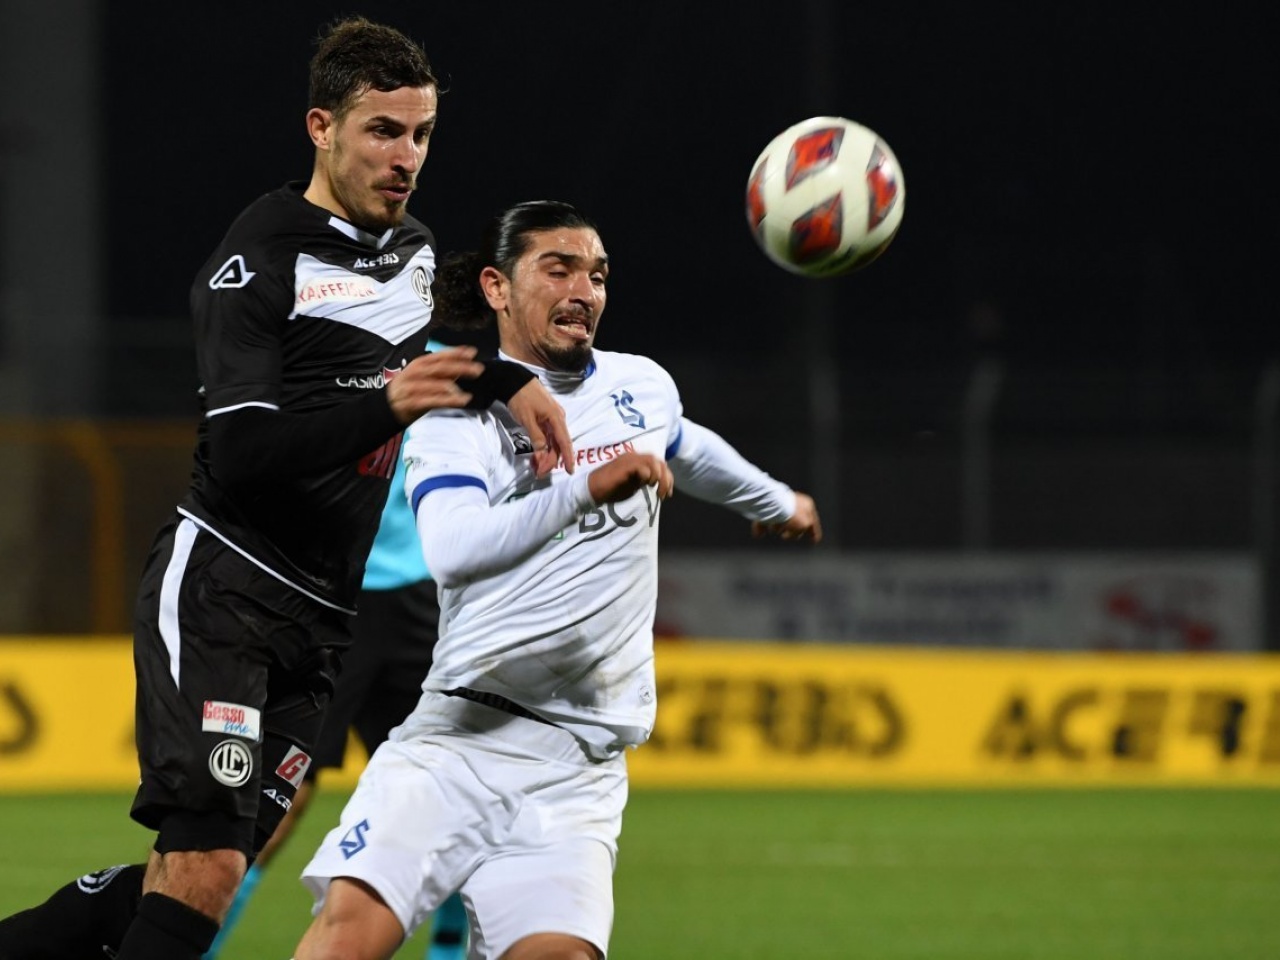 FC Lugano - #LuganoGCZ Full Time 3-1 ⚽️ Gerndt ⚽️ Lovric